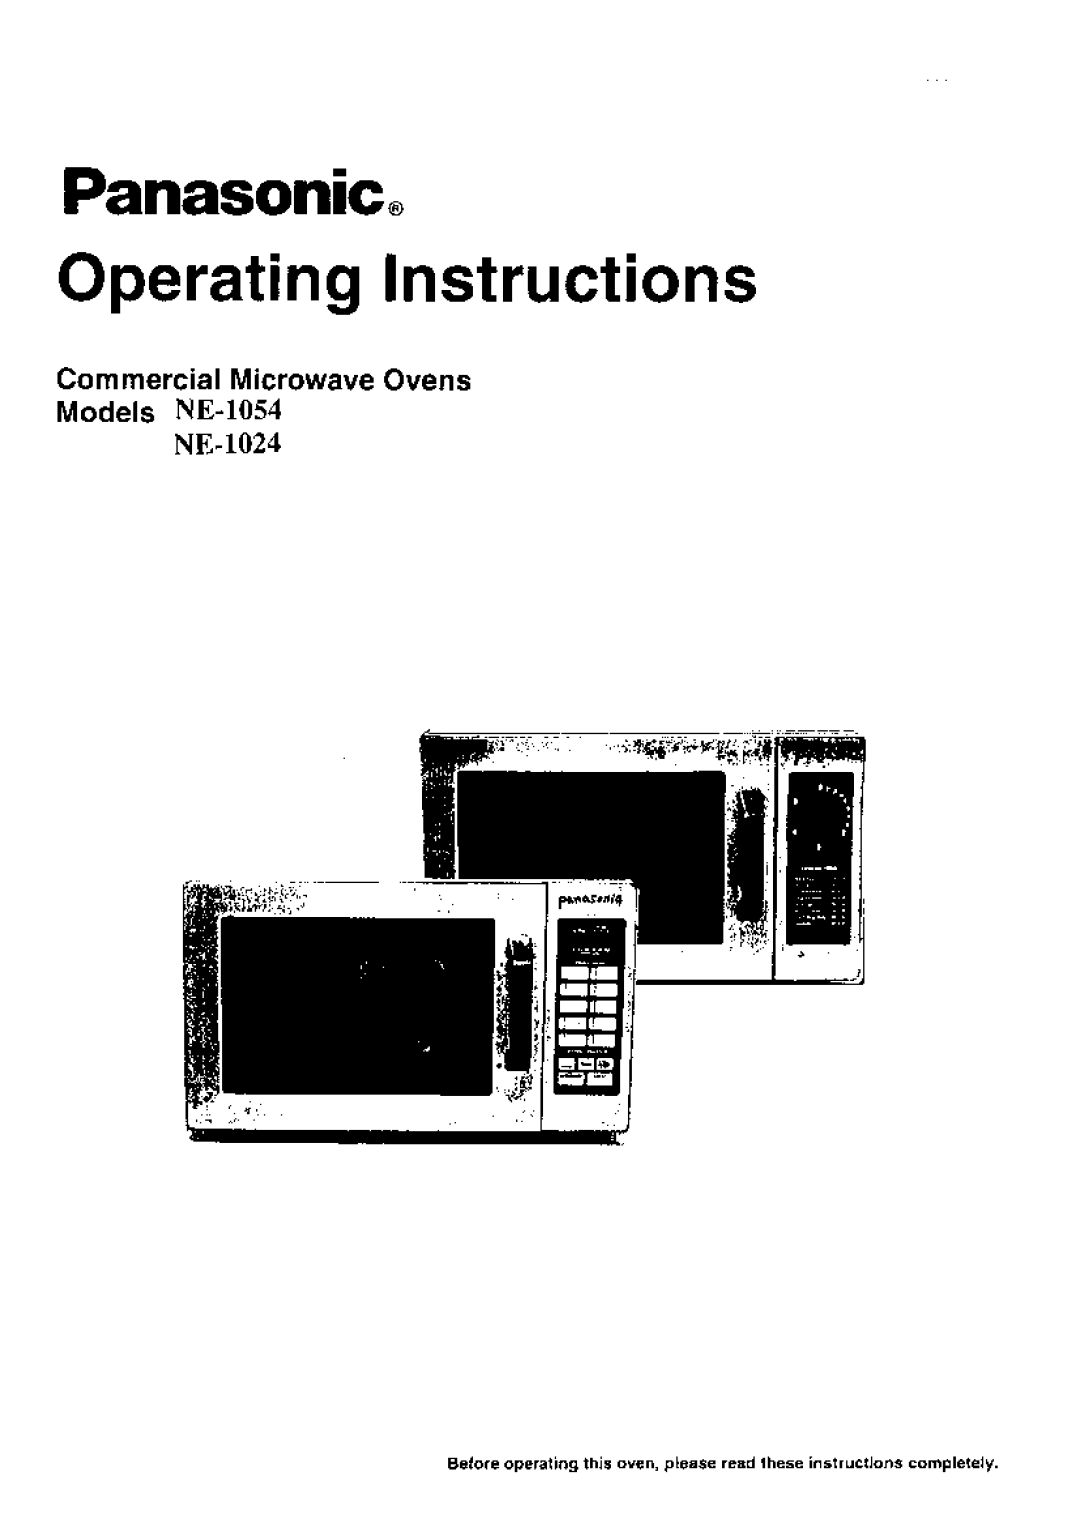 Panasonic manual CommercialMicrowaveOvens, Models NE-1054 NB-1024, Operating Instructions, Panasonic 